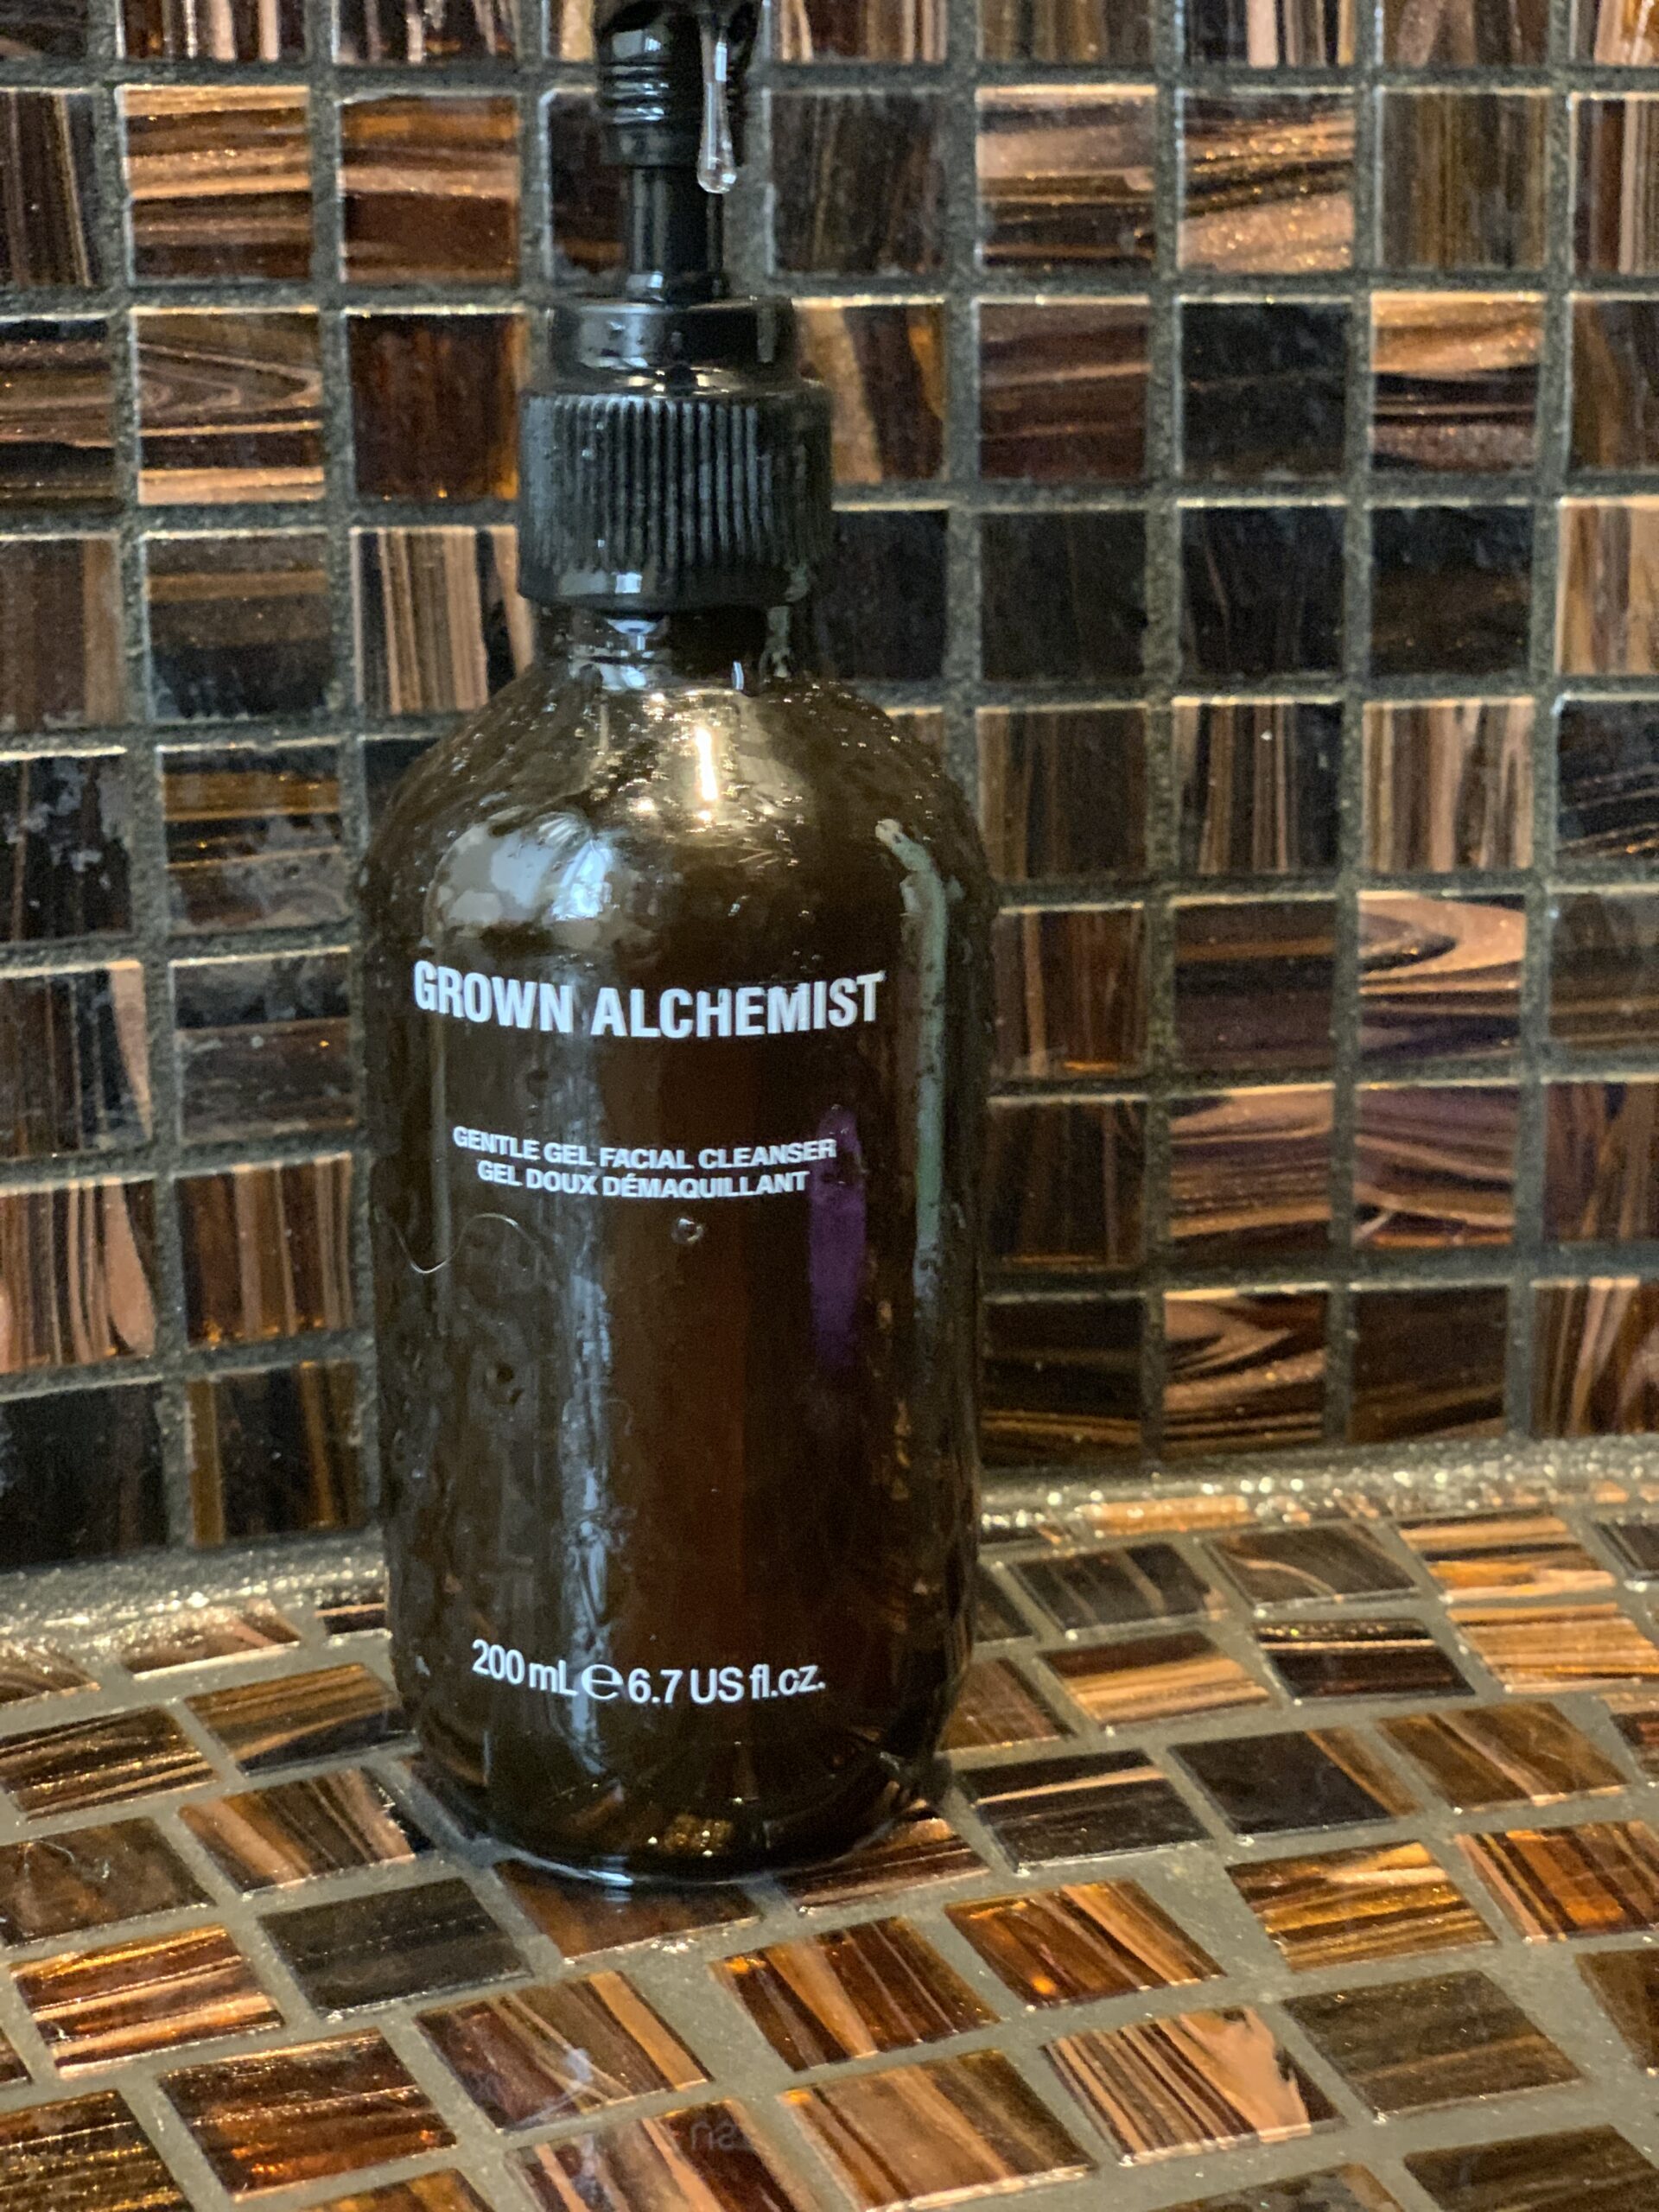 Grown Alchemist gentle gel facial cleanser